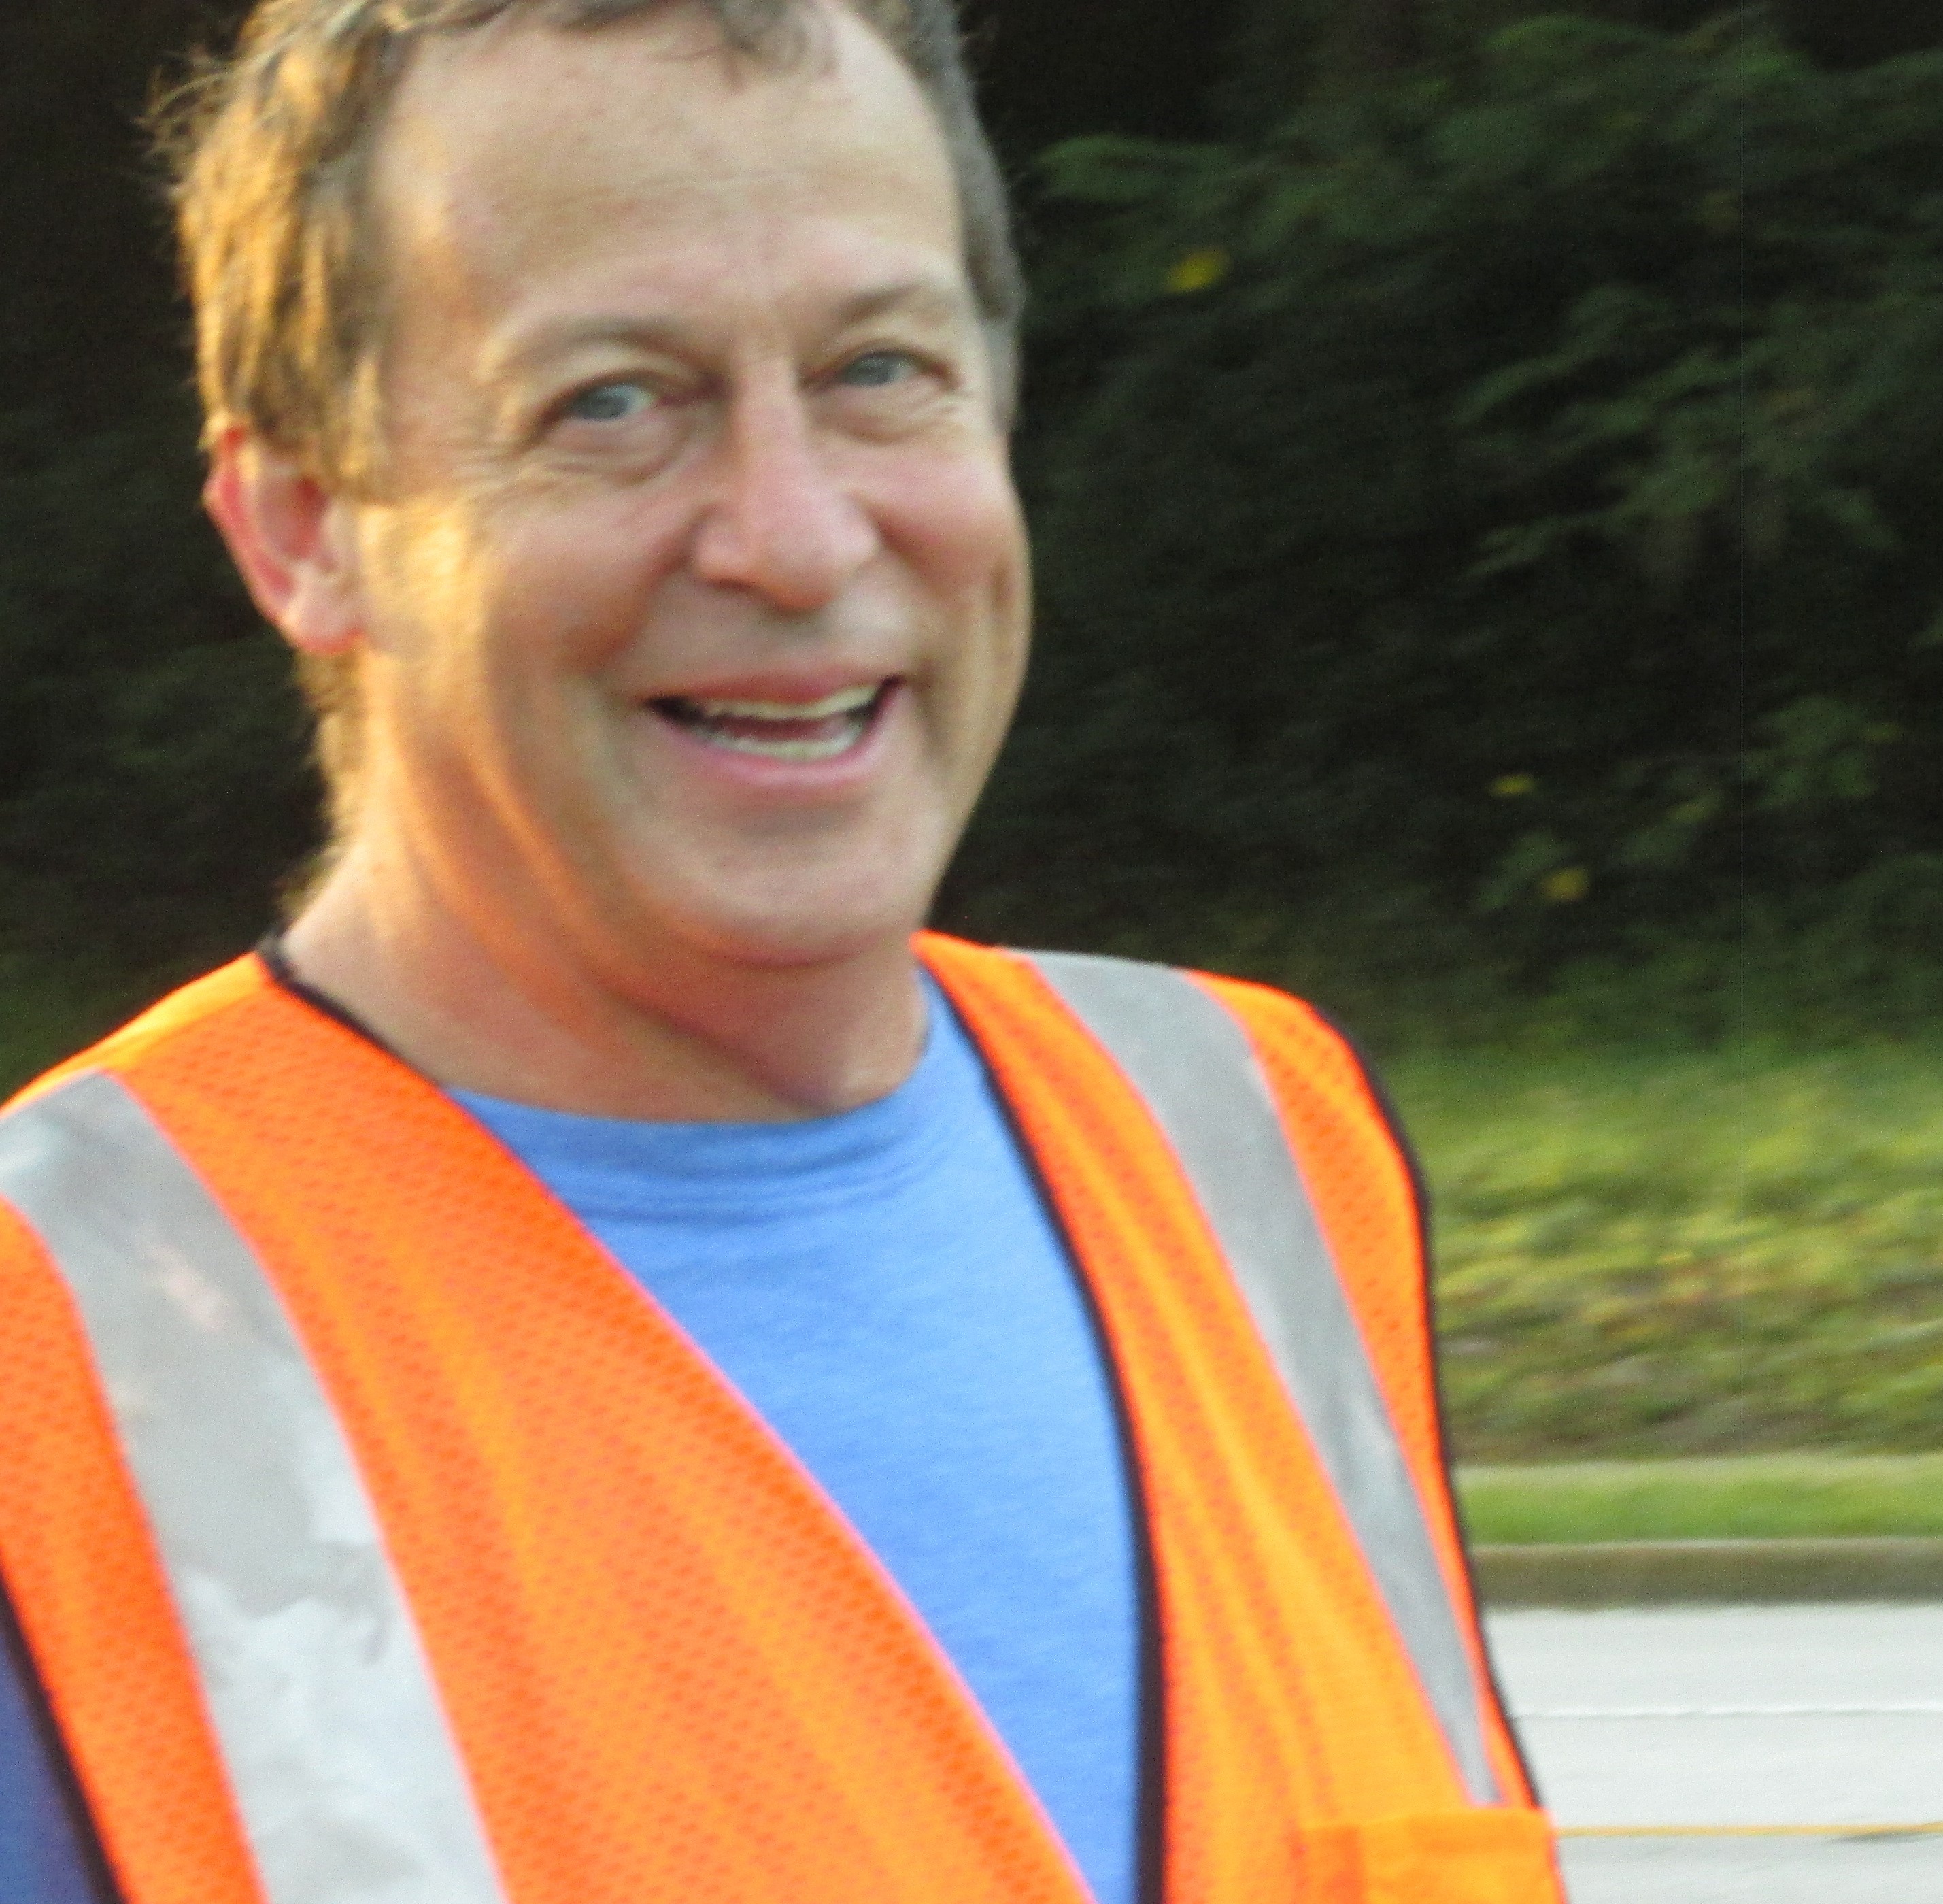 John Treadway enjoying the road cleanup